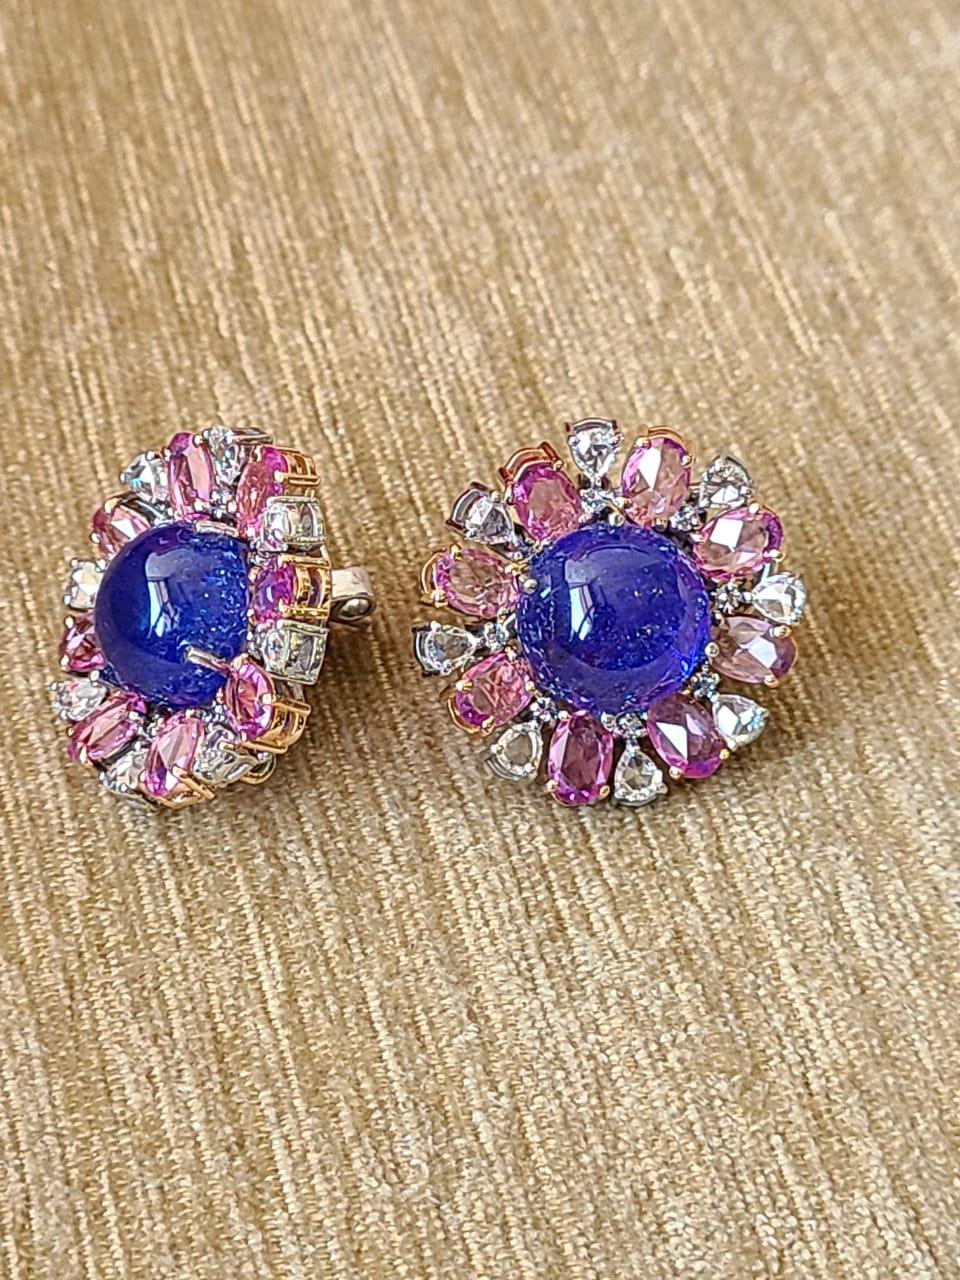 Rose Cut Natural Tanzanite, Pink Sapphires & Diamonds Stud Earrings Set in 18K White Gold